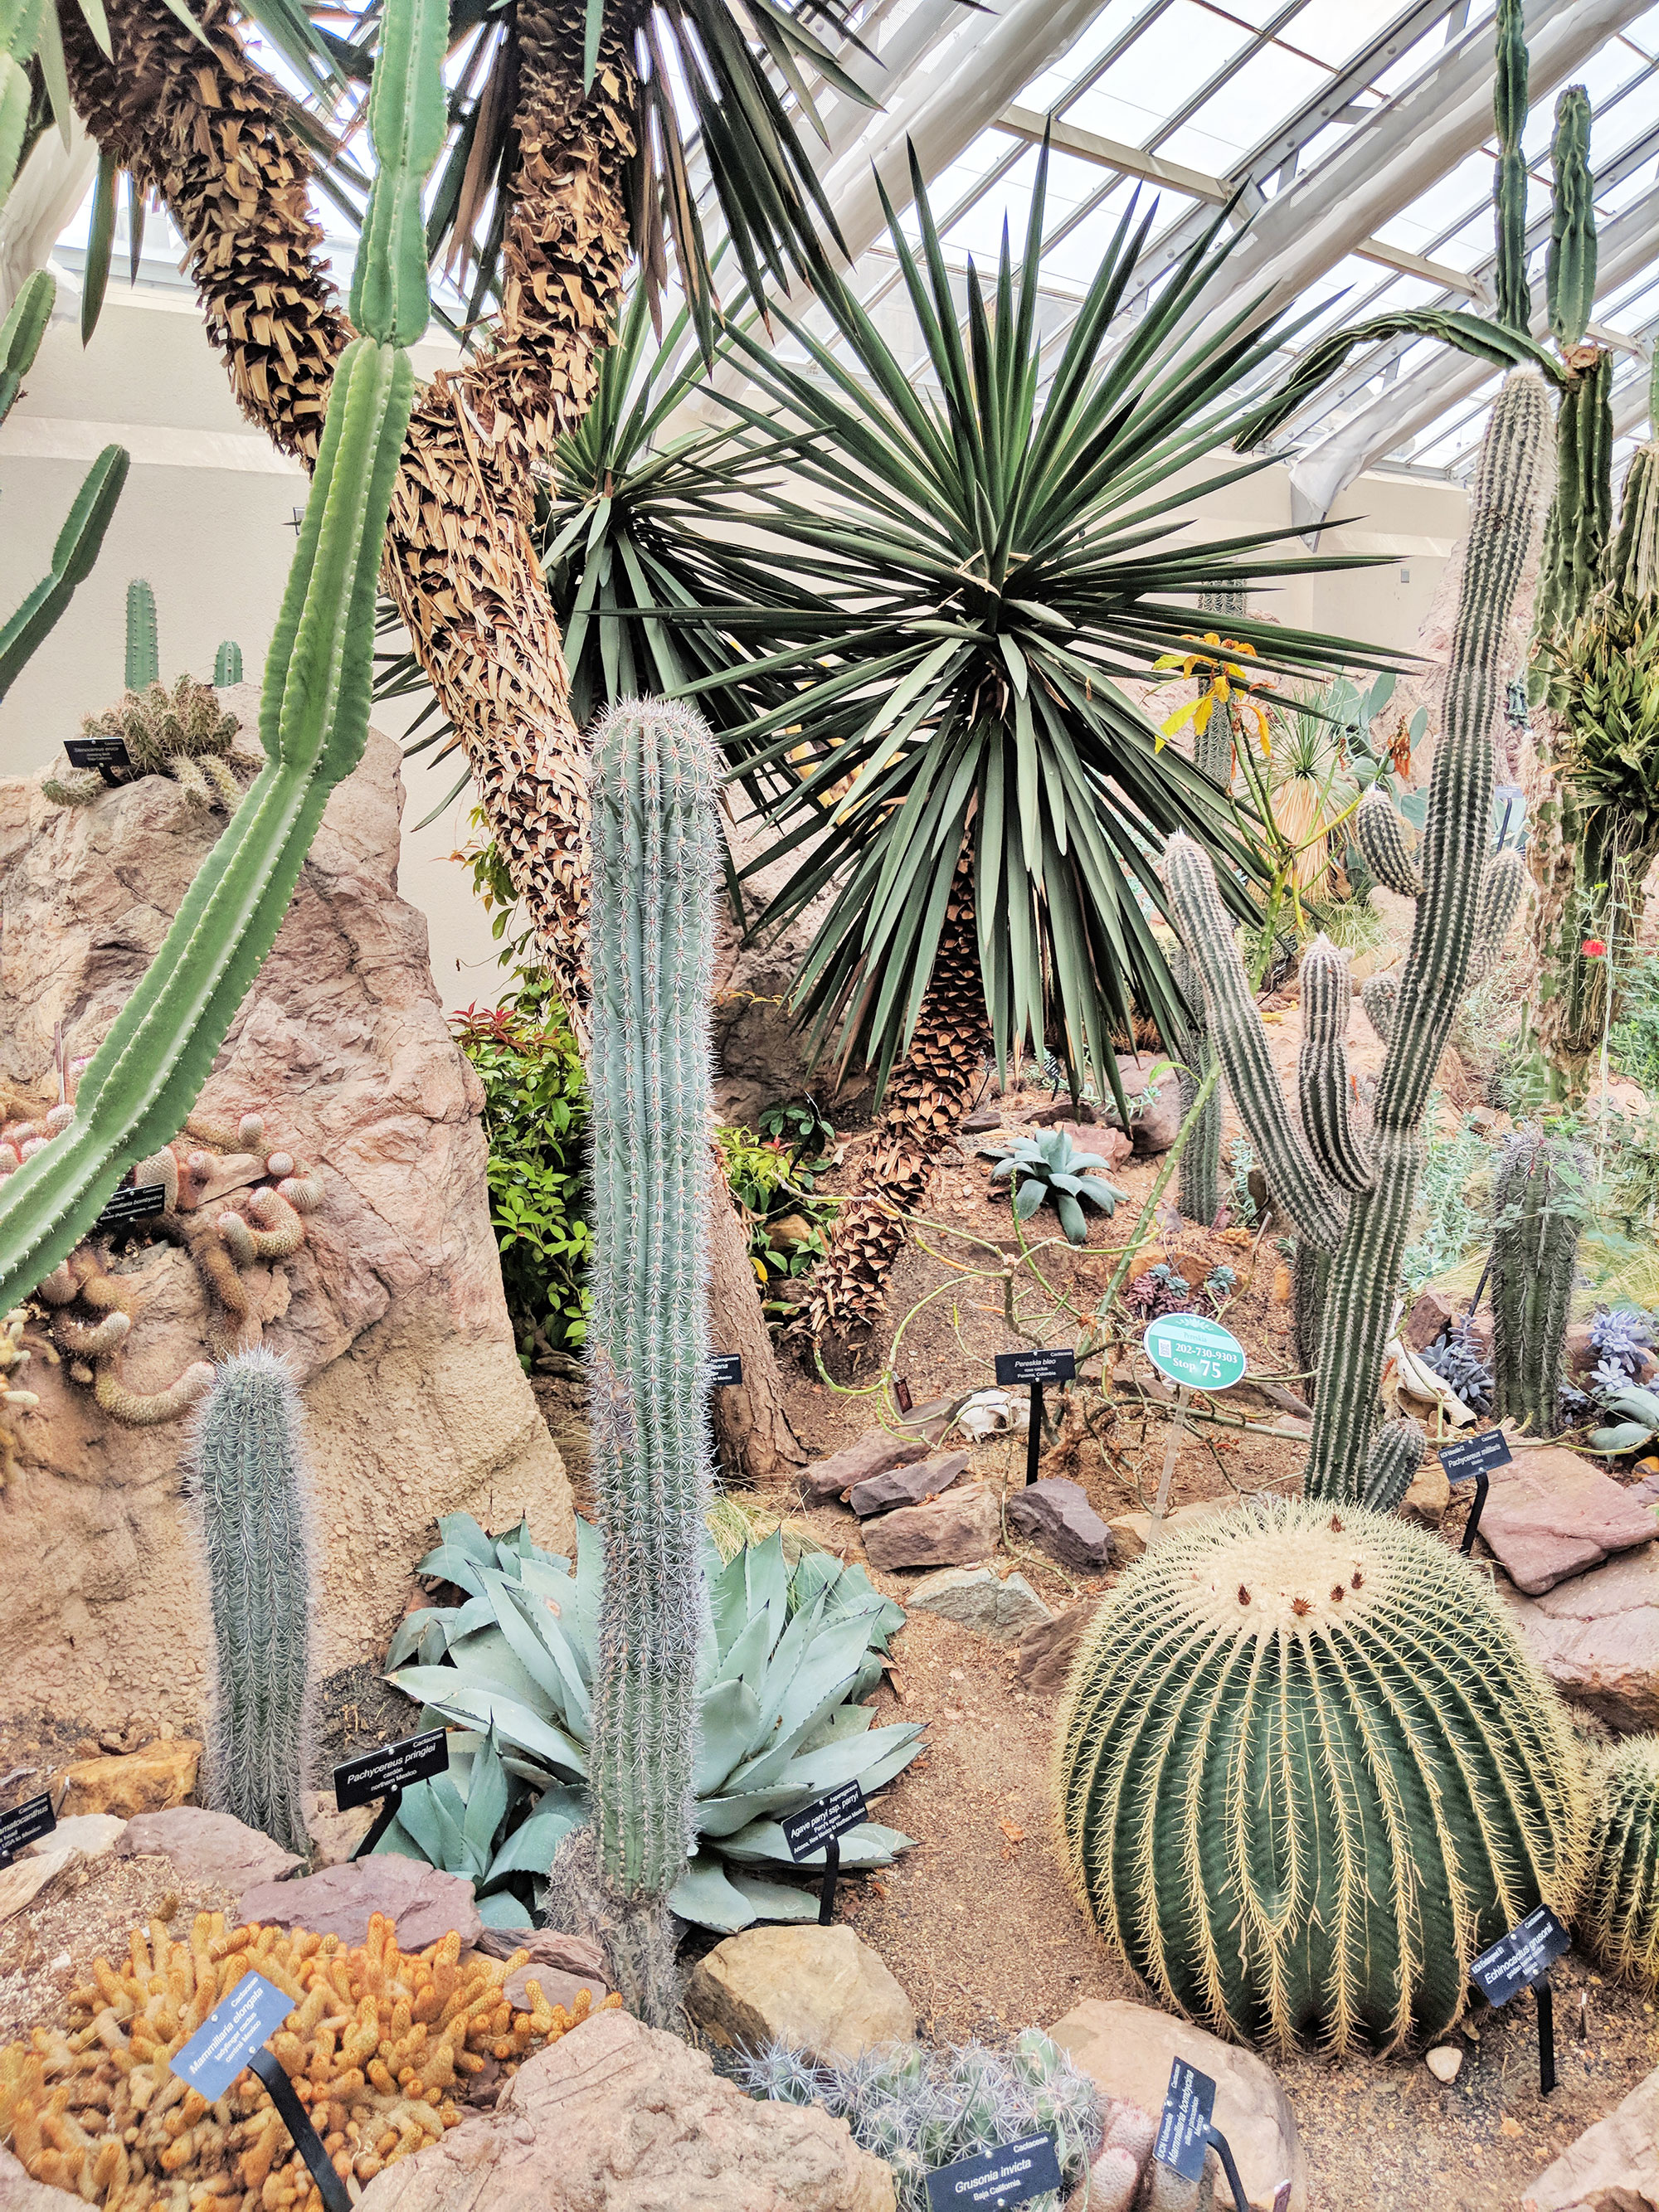 The cactus room of the U.S. Botanical Garden in Washington, D.C.